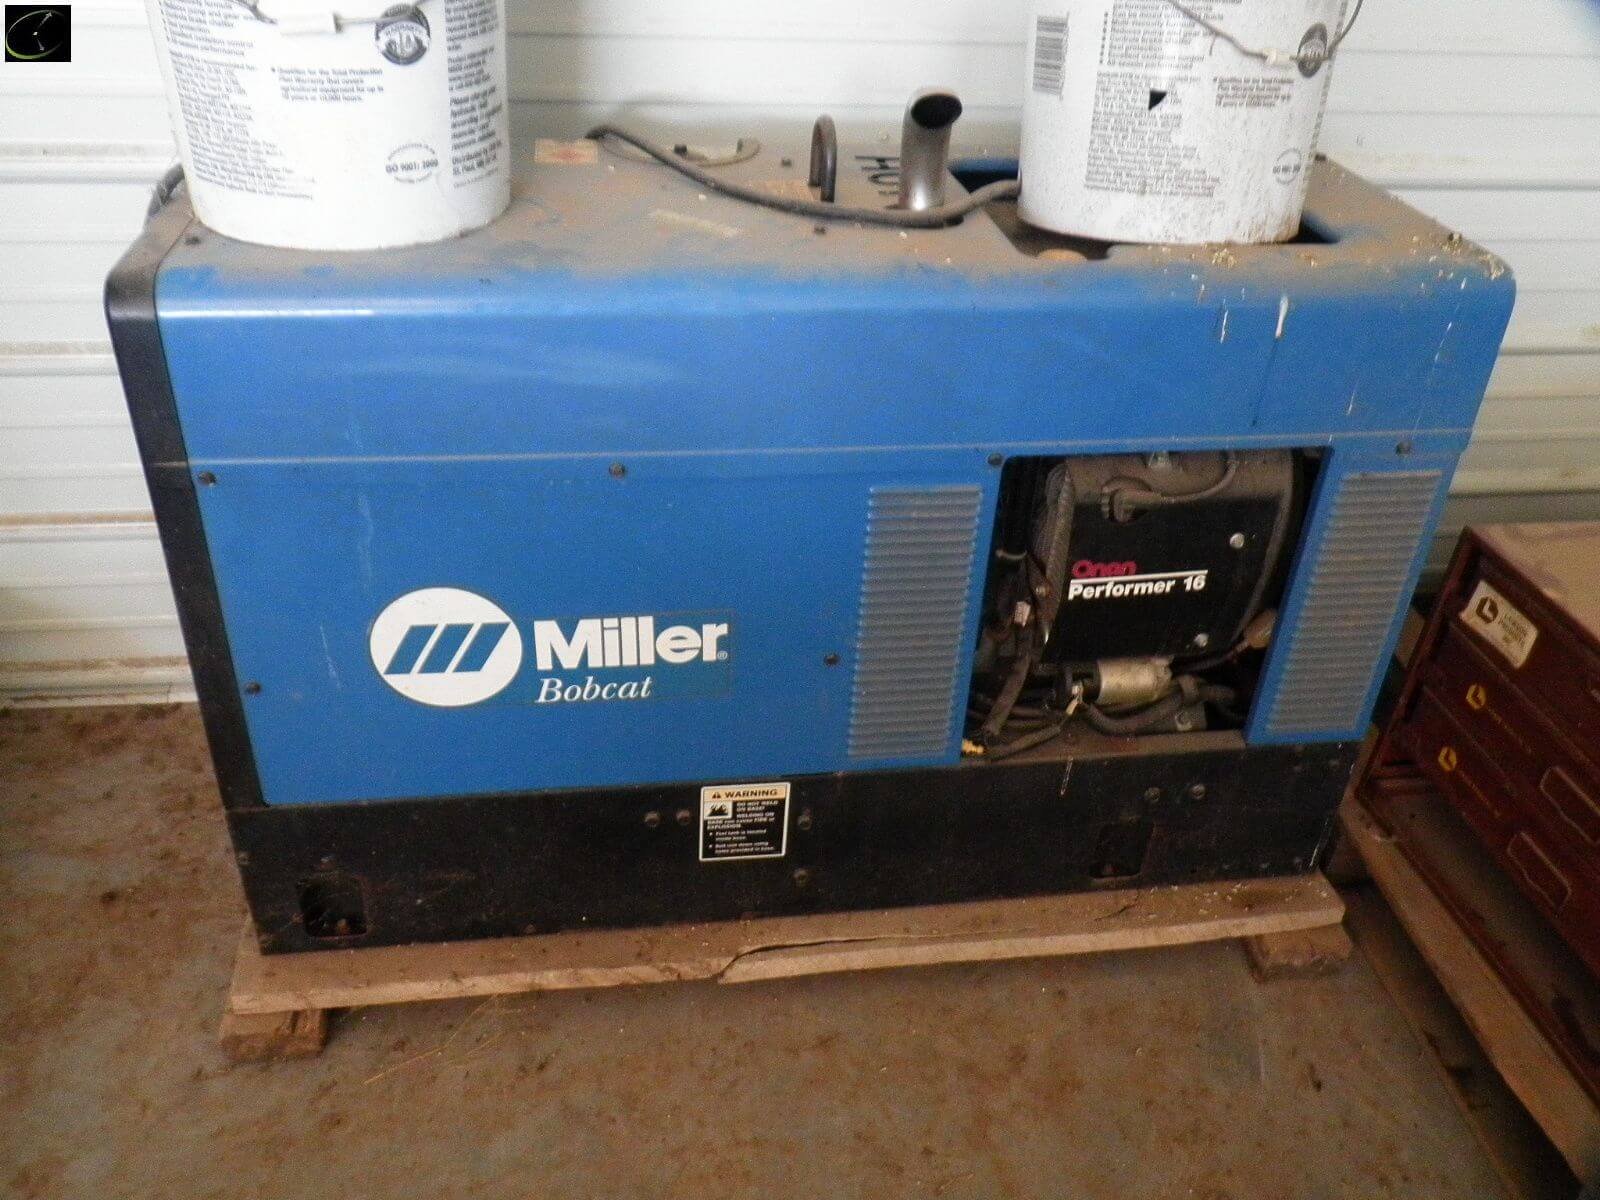 Miller Bobcat 225 welder-generator main image